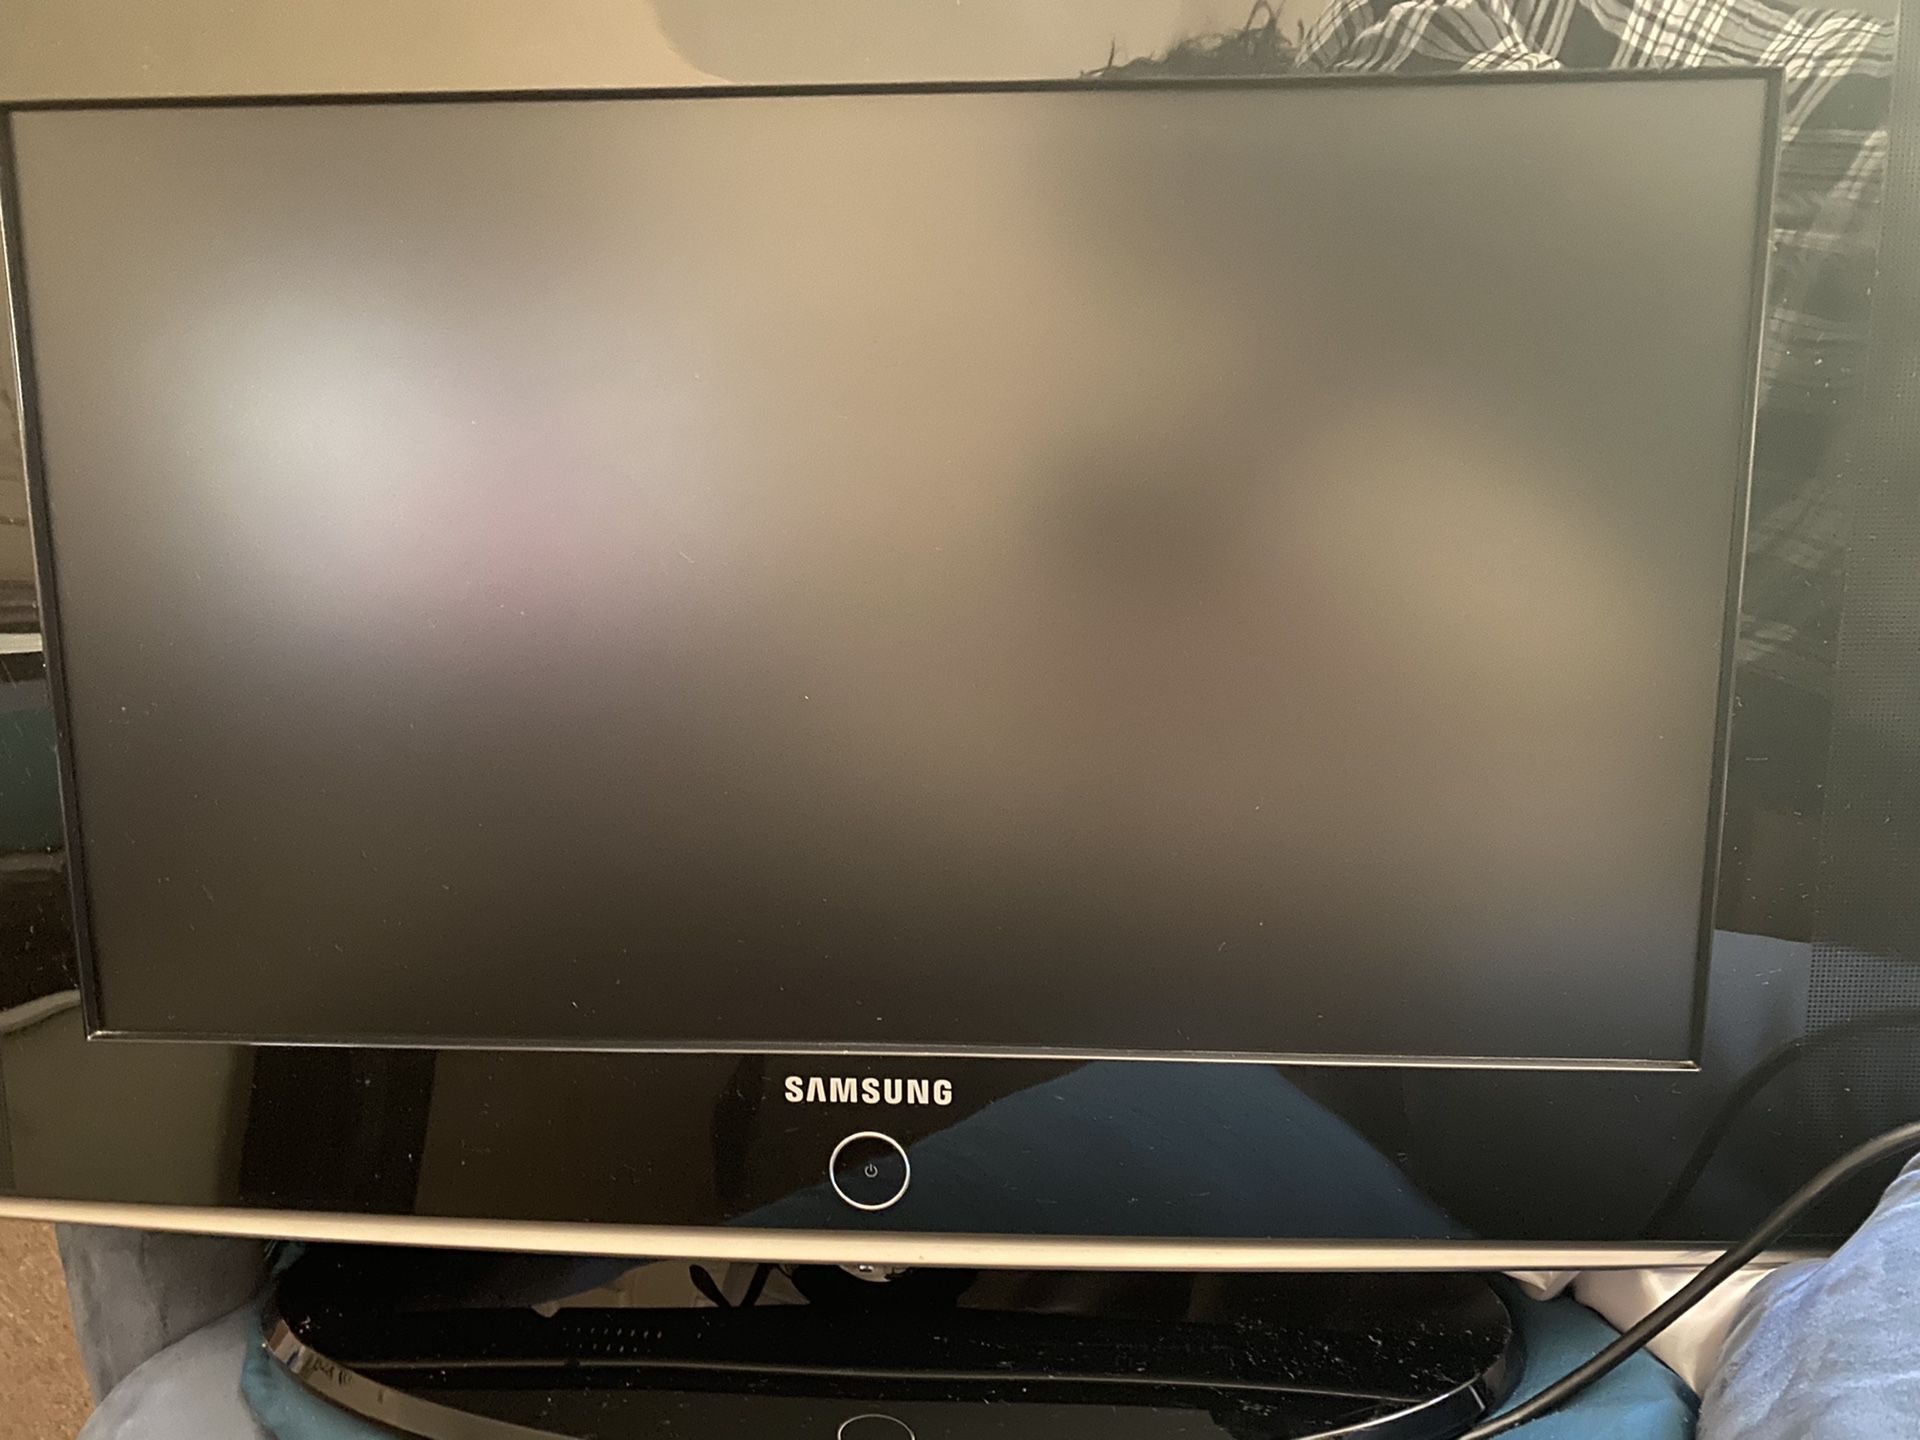 SAMSUNG 26" widescreen HDTV